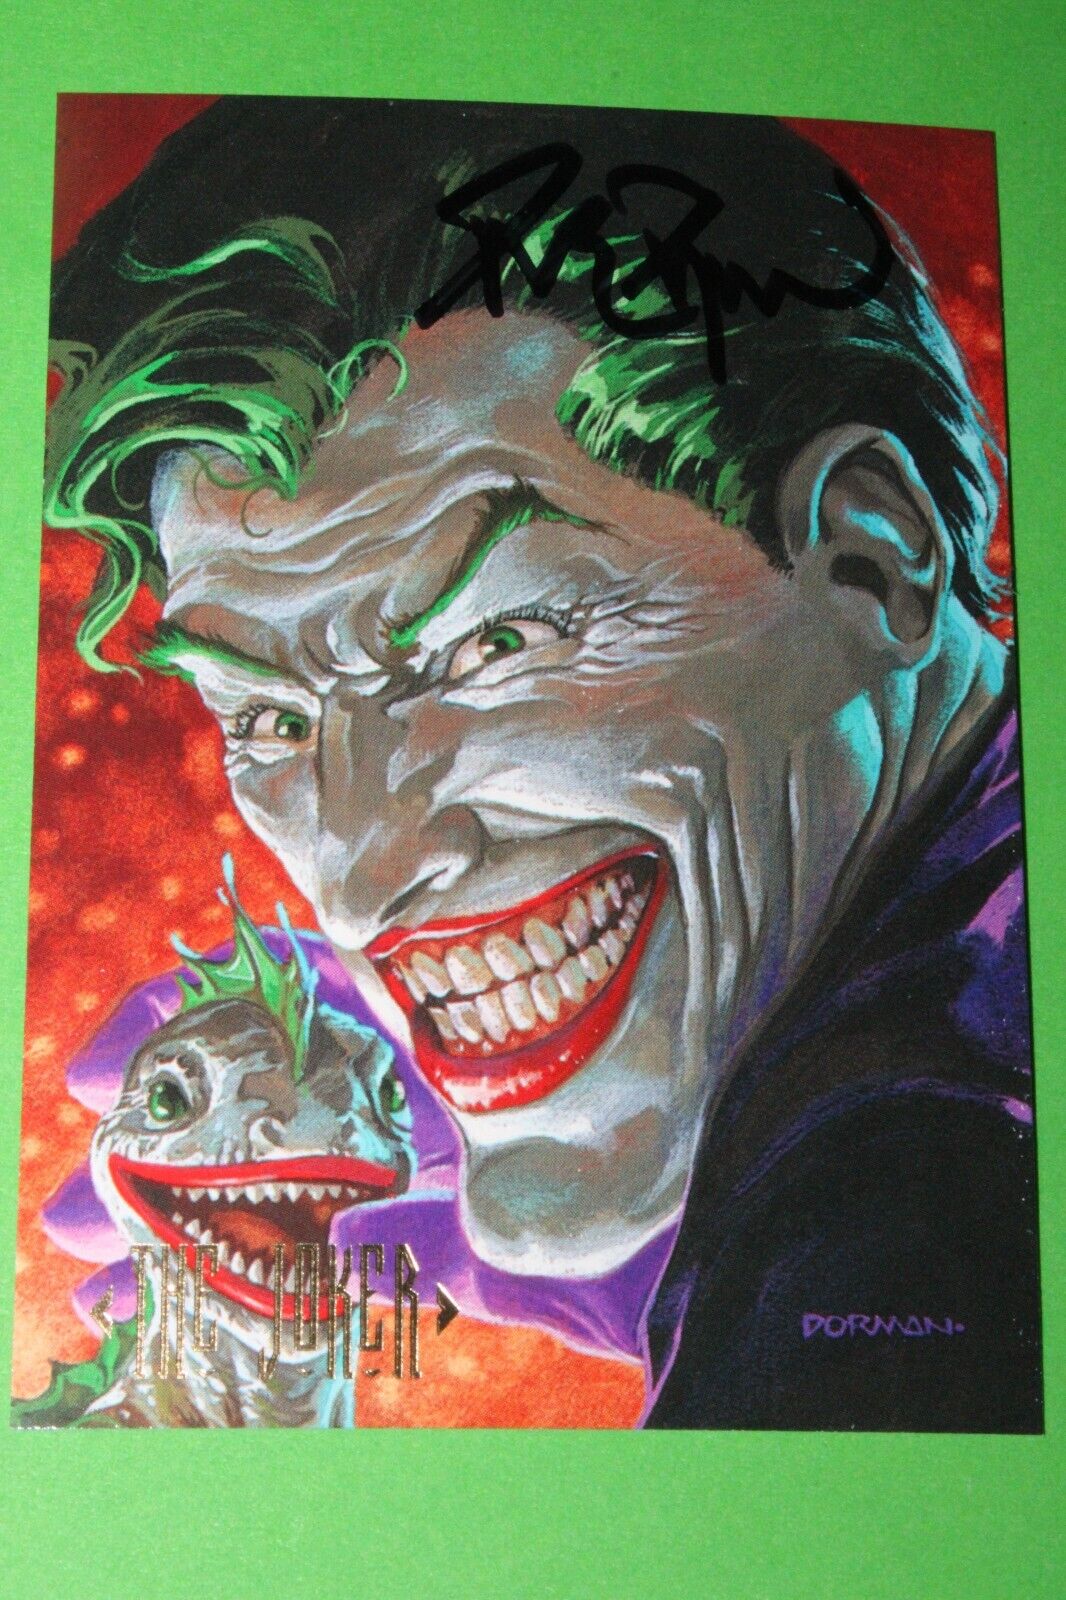 1994 DC MASTER SERIES SIGNED JOKER #33 CARD DAVE DORMAN SIGNATURE BATMAN